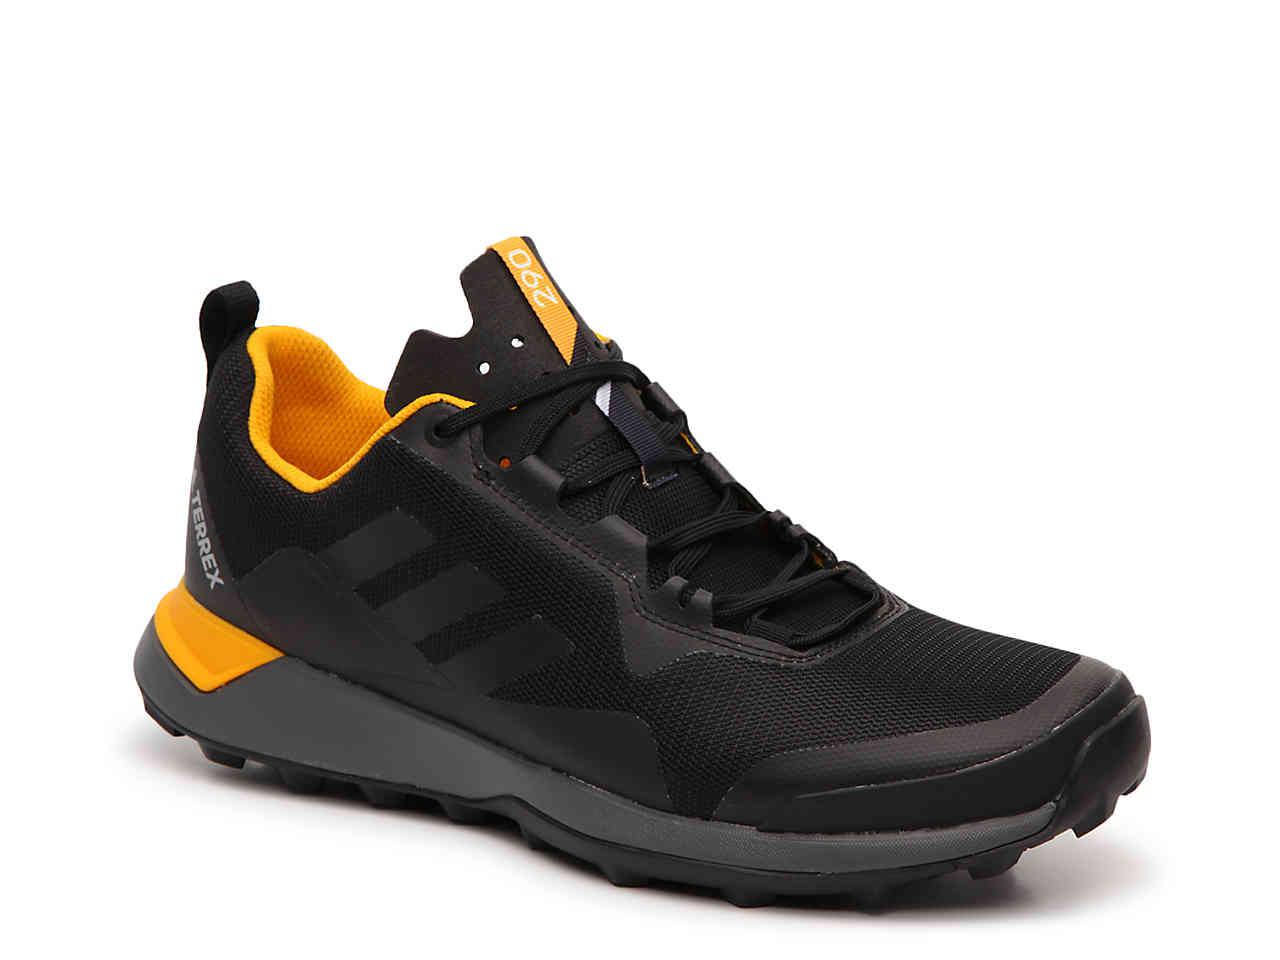 adidas Rubber Terrex Cmtk 290 Trail Shoe in Black/Yellow (Black) for Men -  Lyst